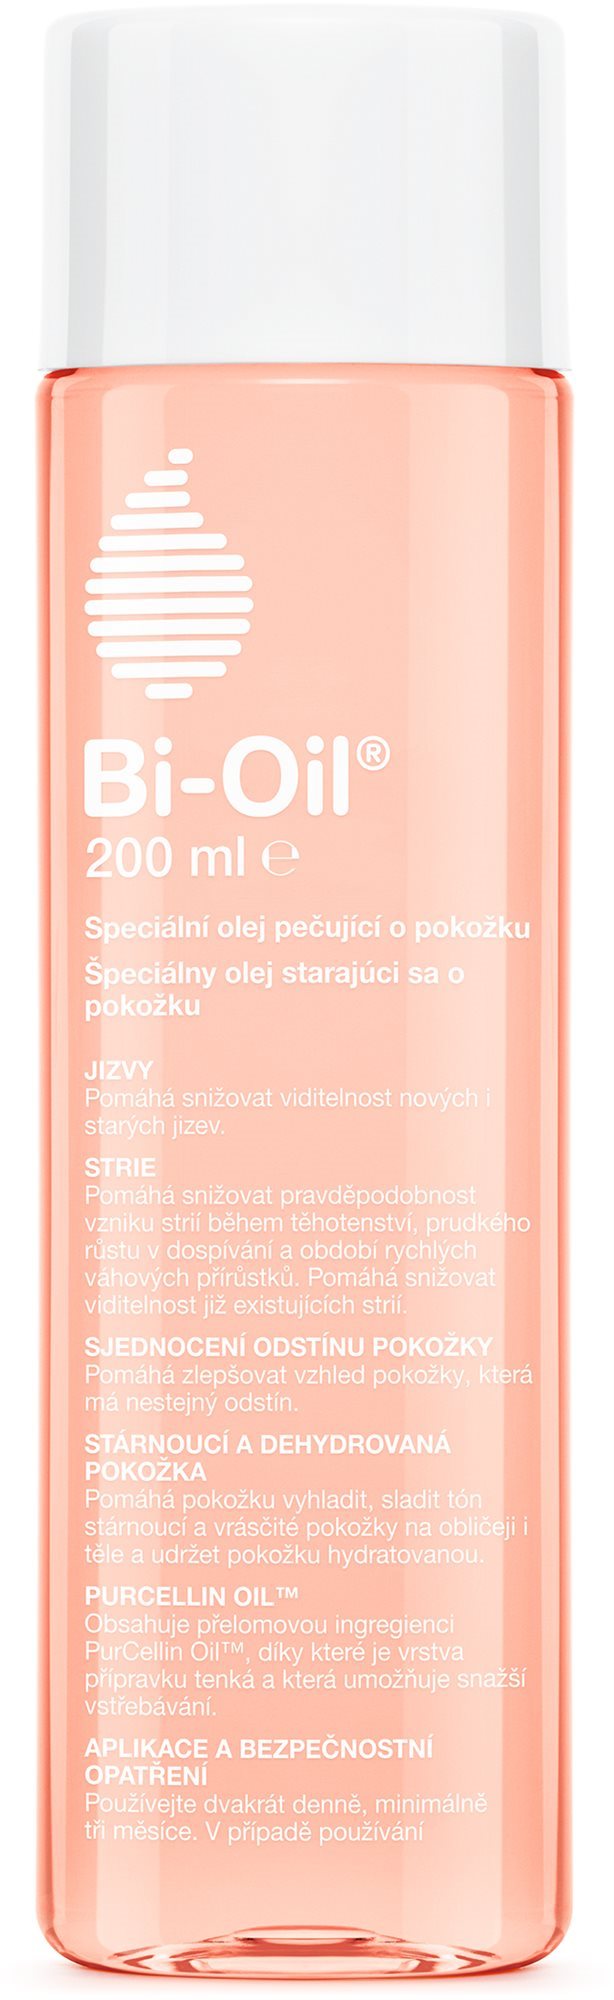 BI-OIL 200 ml